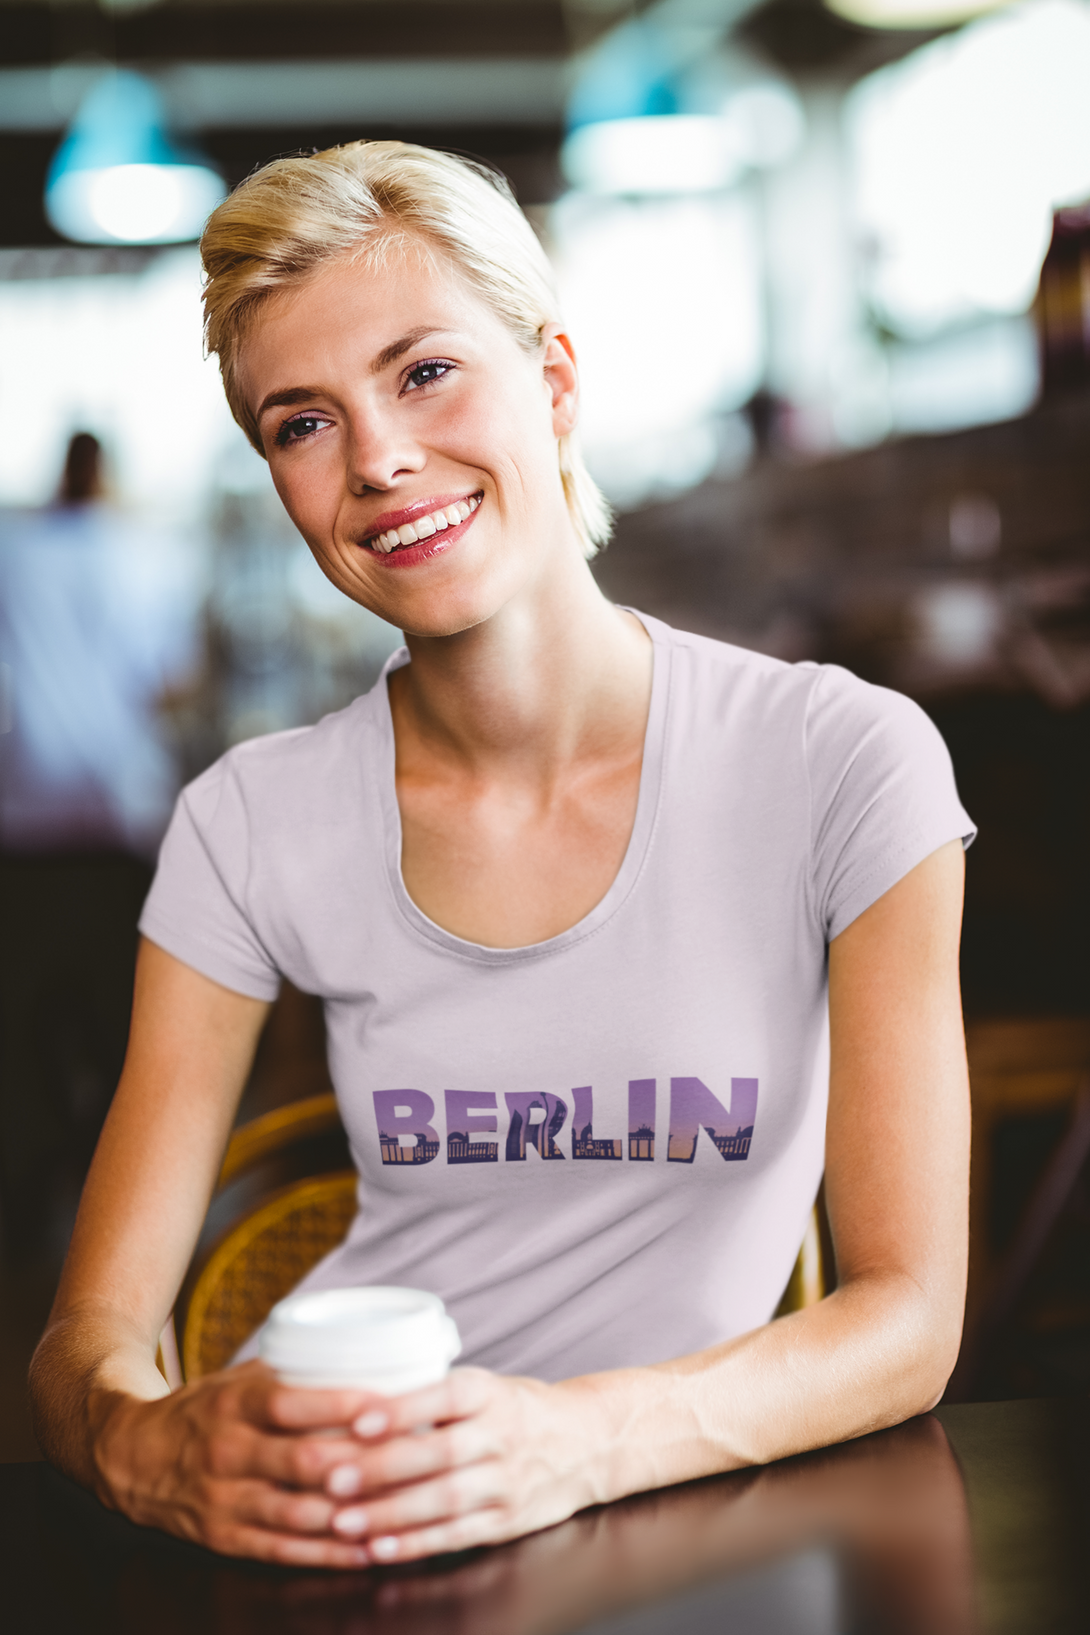 Berlin Skyline Printed Scoop Neck T-Shirt For Women - WowWaves - 5